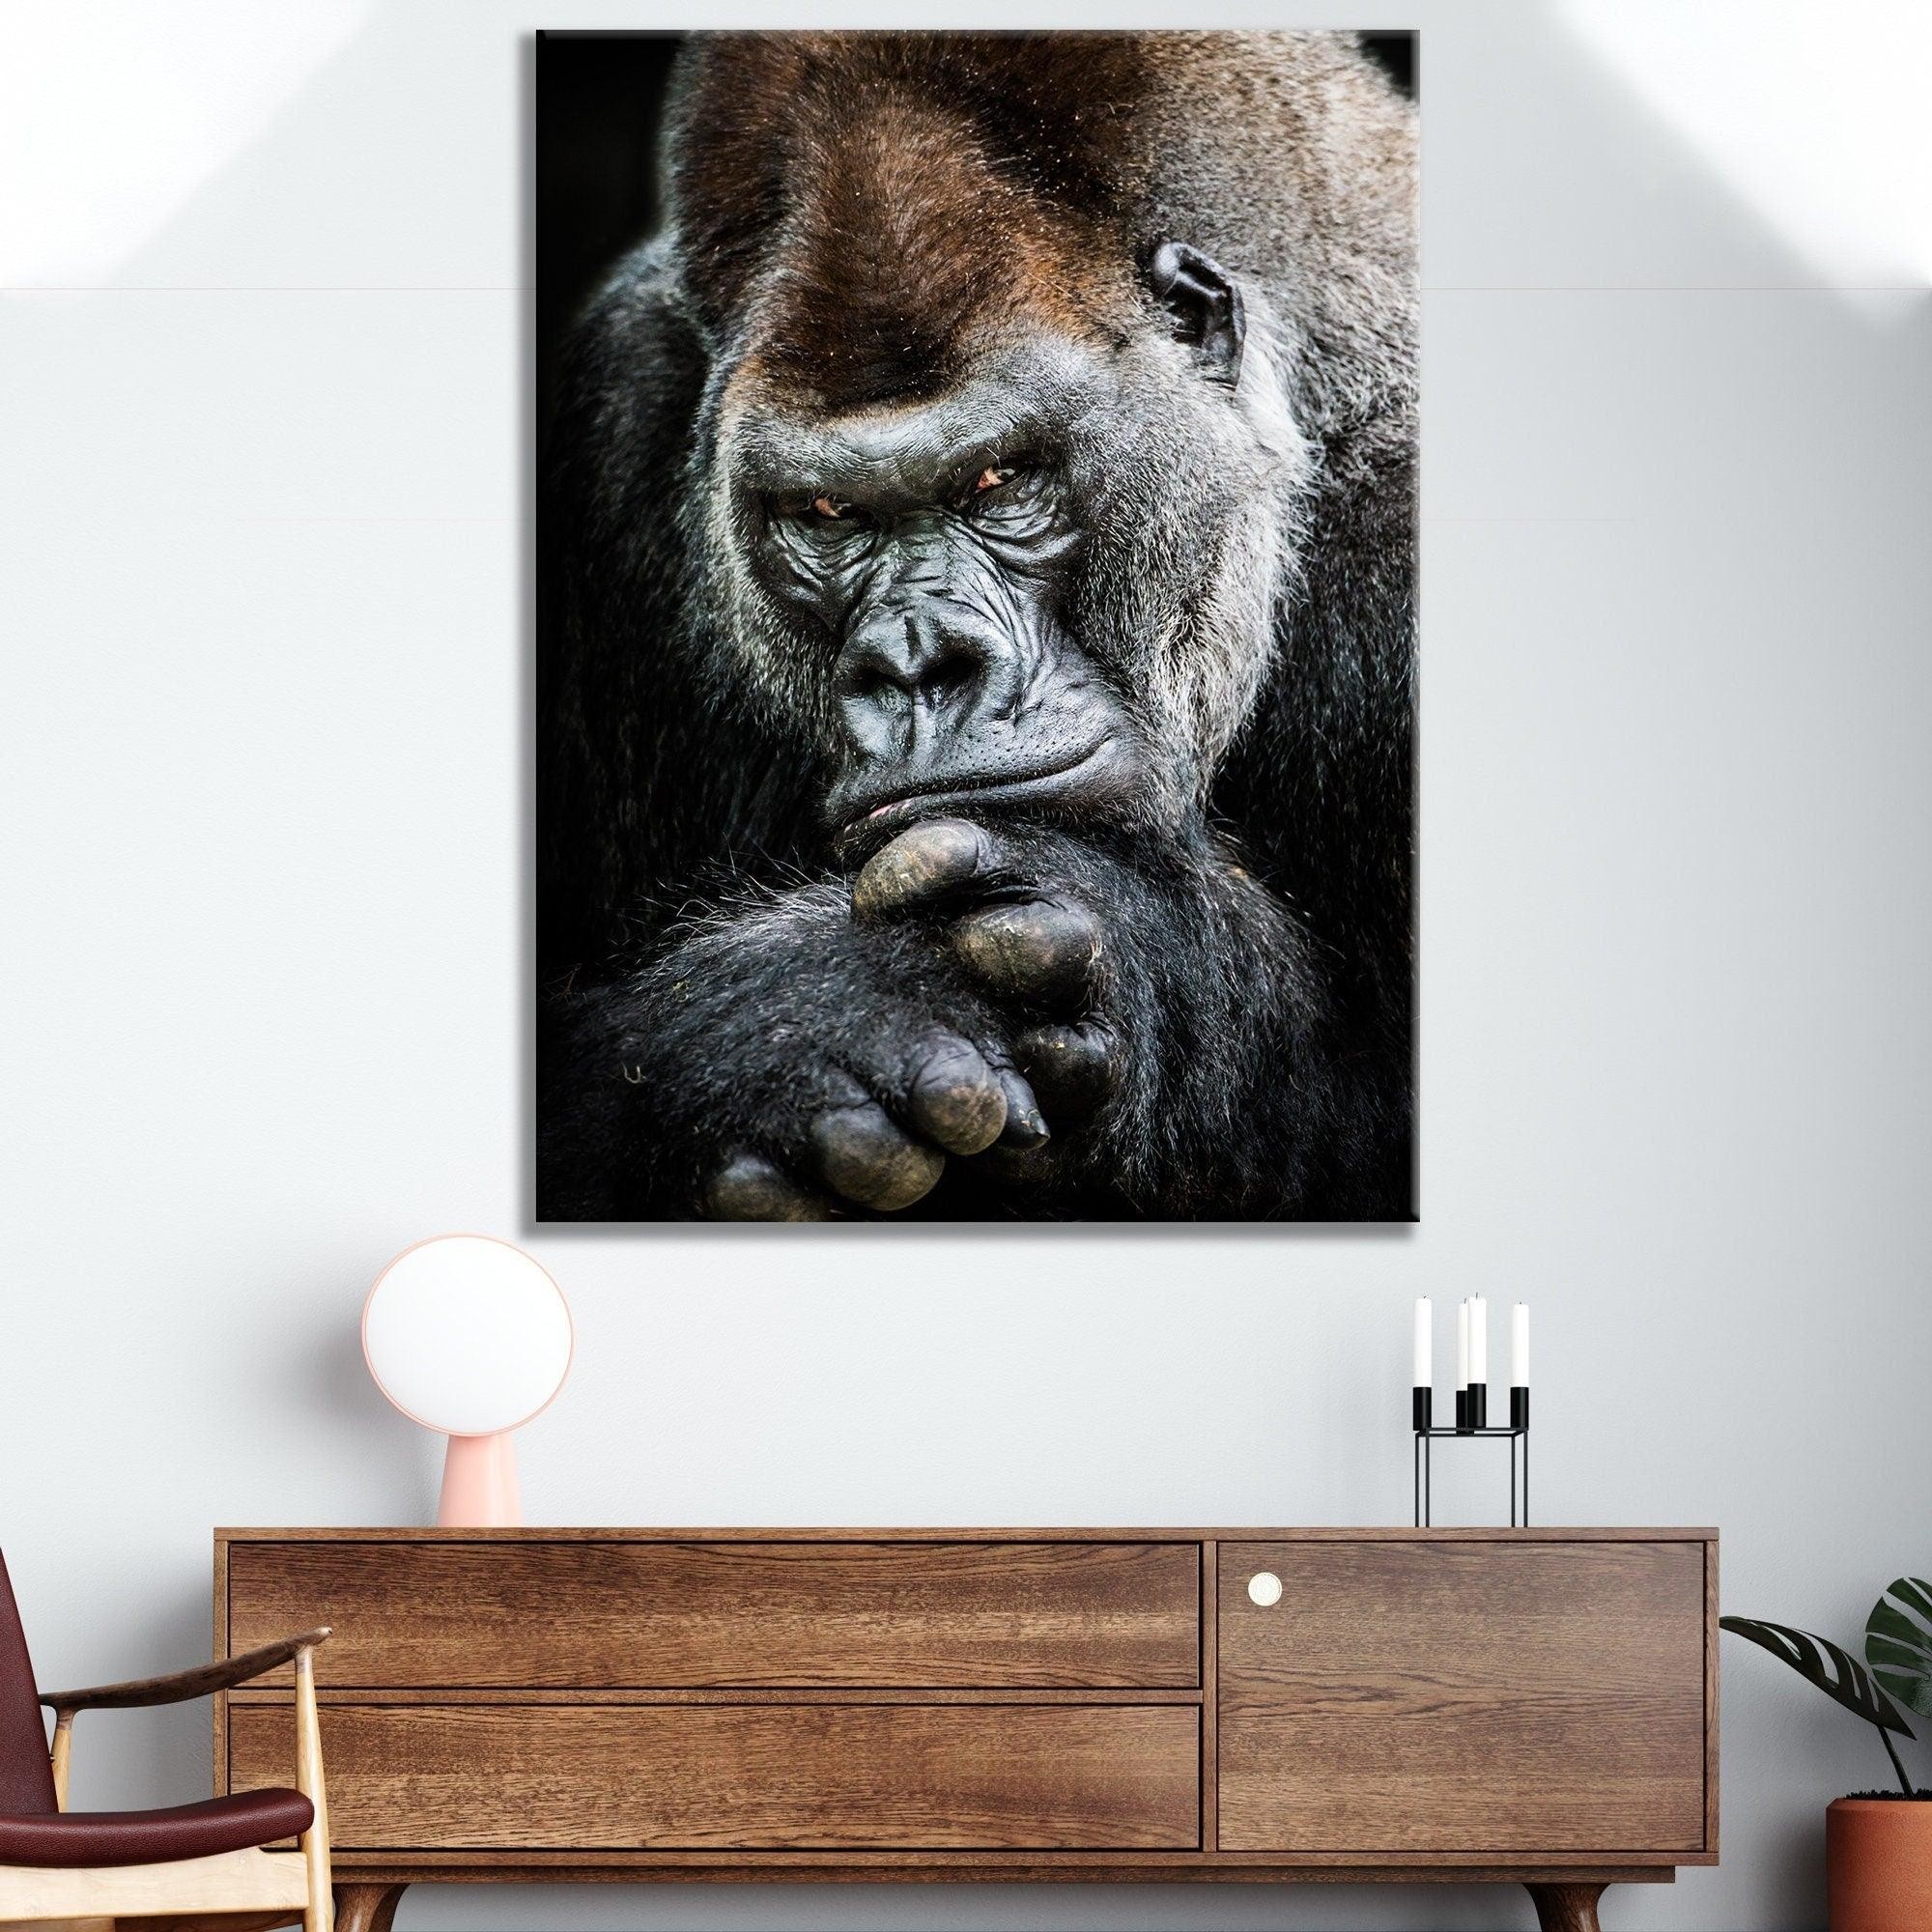 Gorilla Chimp Canvas Wall Art| Canvas Wall Set, Canvas Print, Canvas Painting, Abstract Animal Art, Monkey Wall Art, Gorilla Canvas, Set